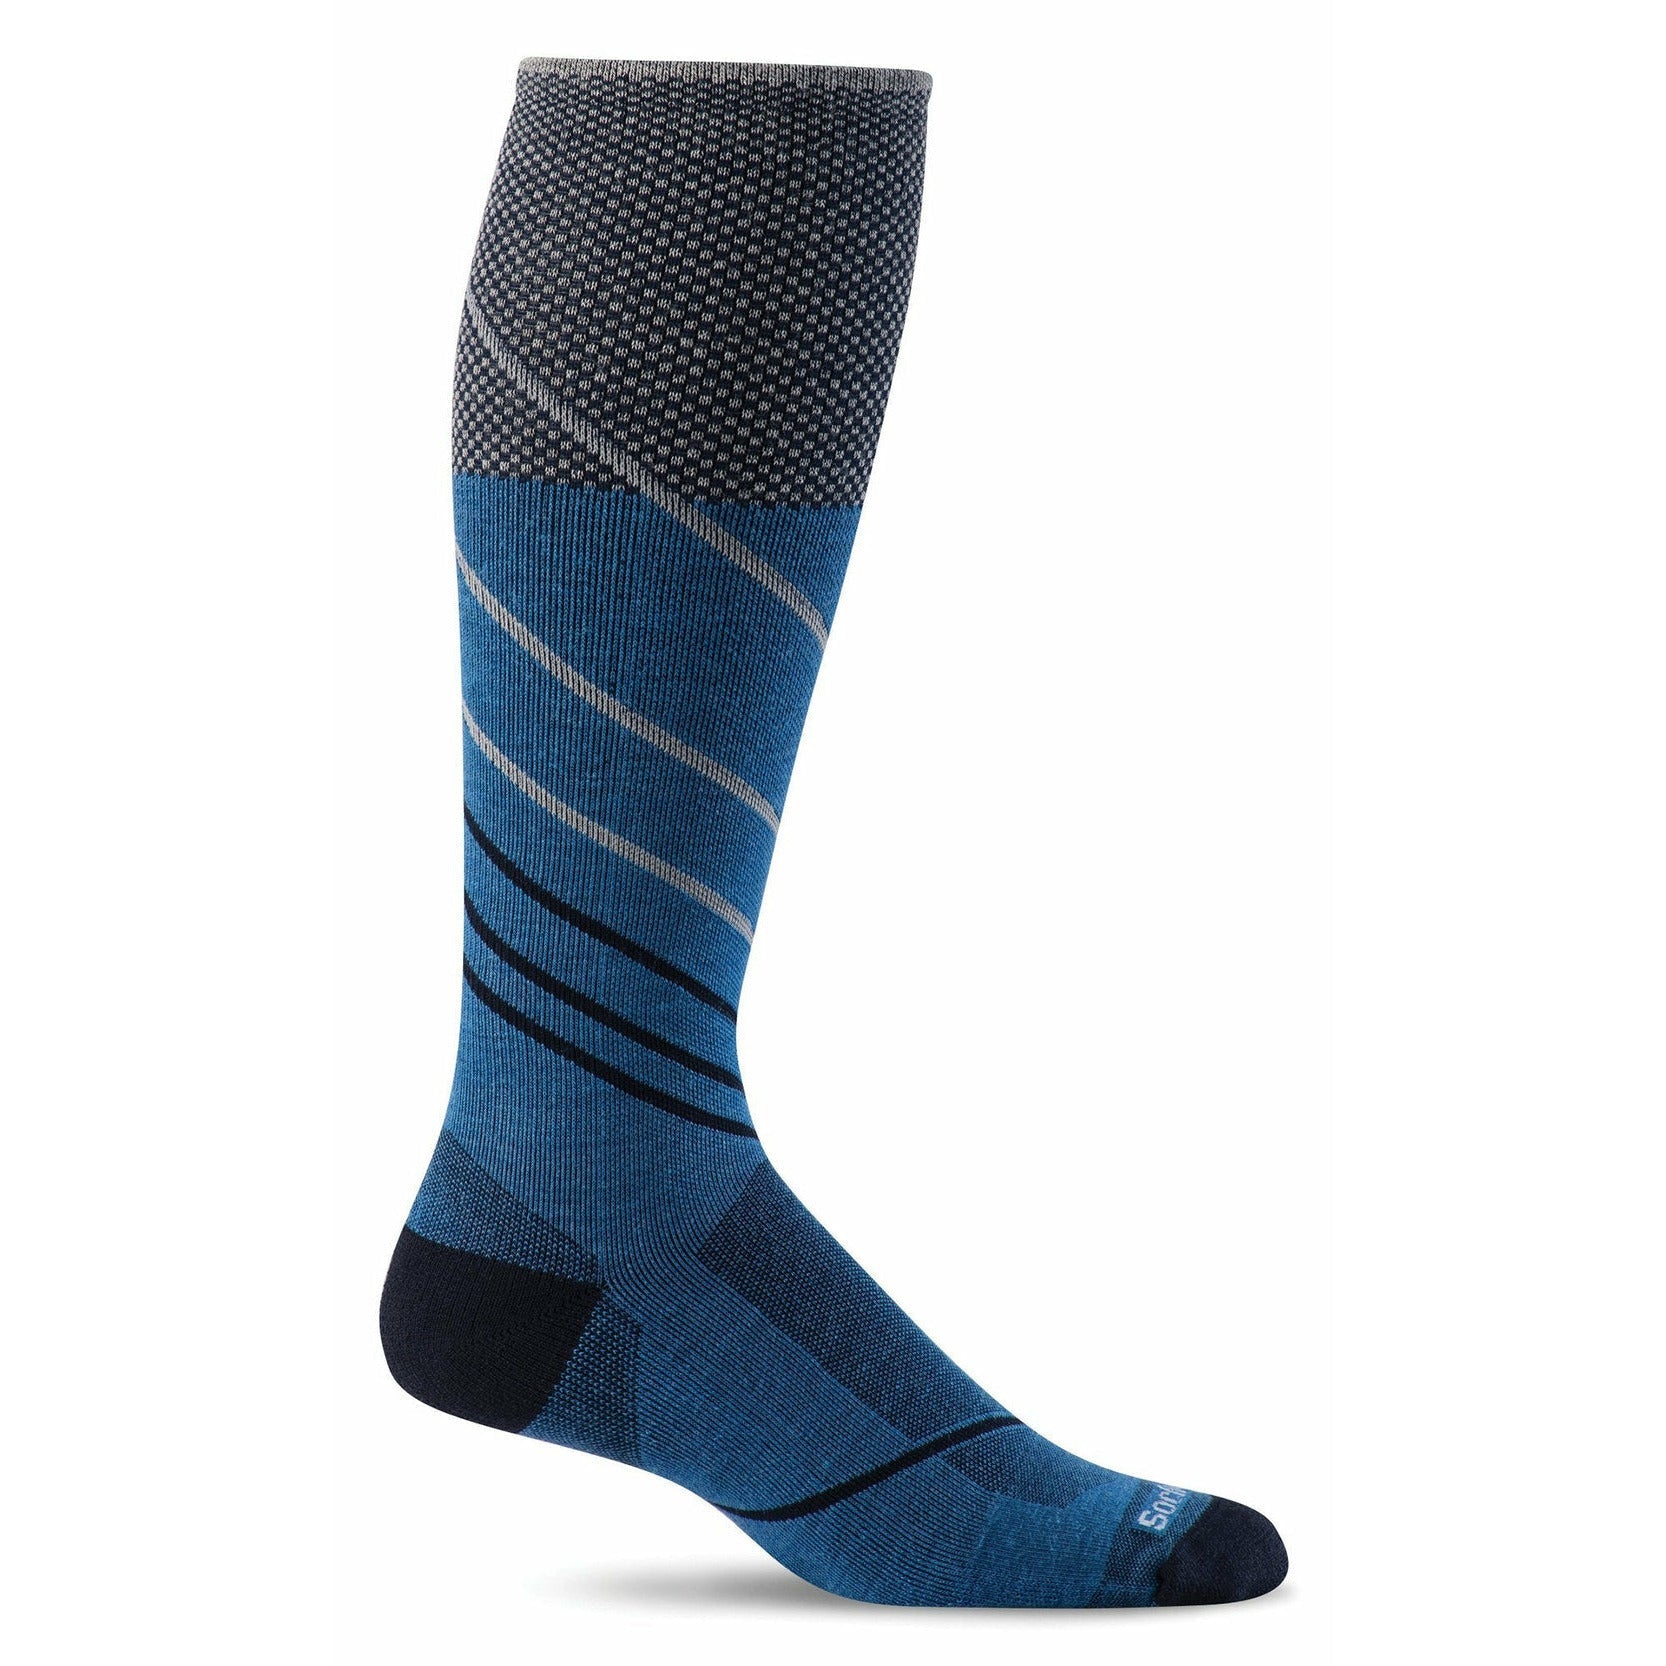 Men's Pulse OTC Firm Graduated Compression Socks